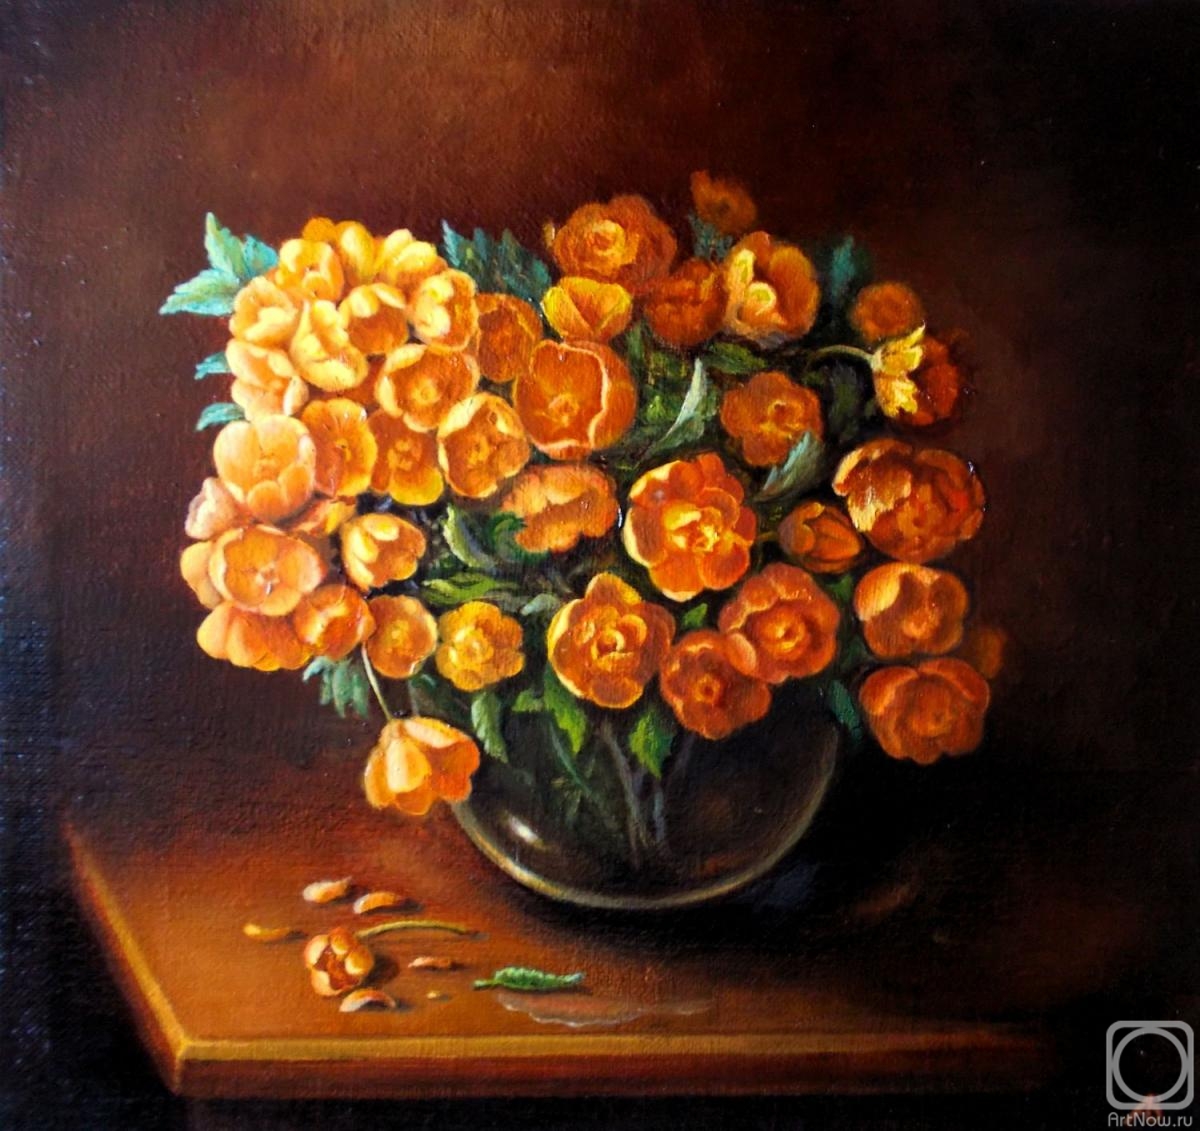 Abaimov Vladimir. The Spring Bouquet